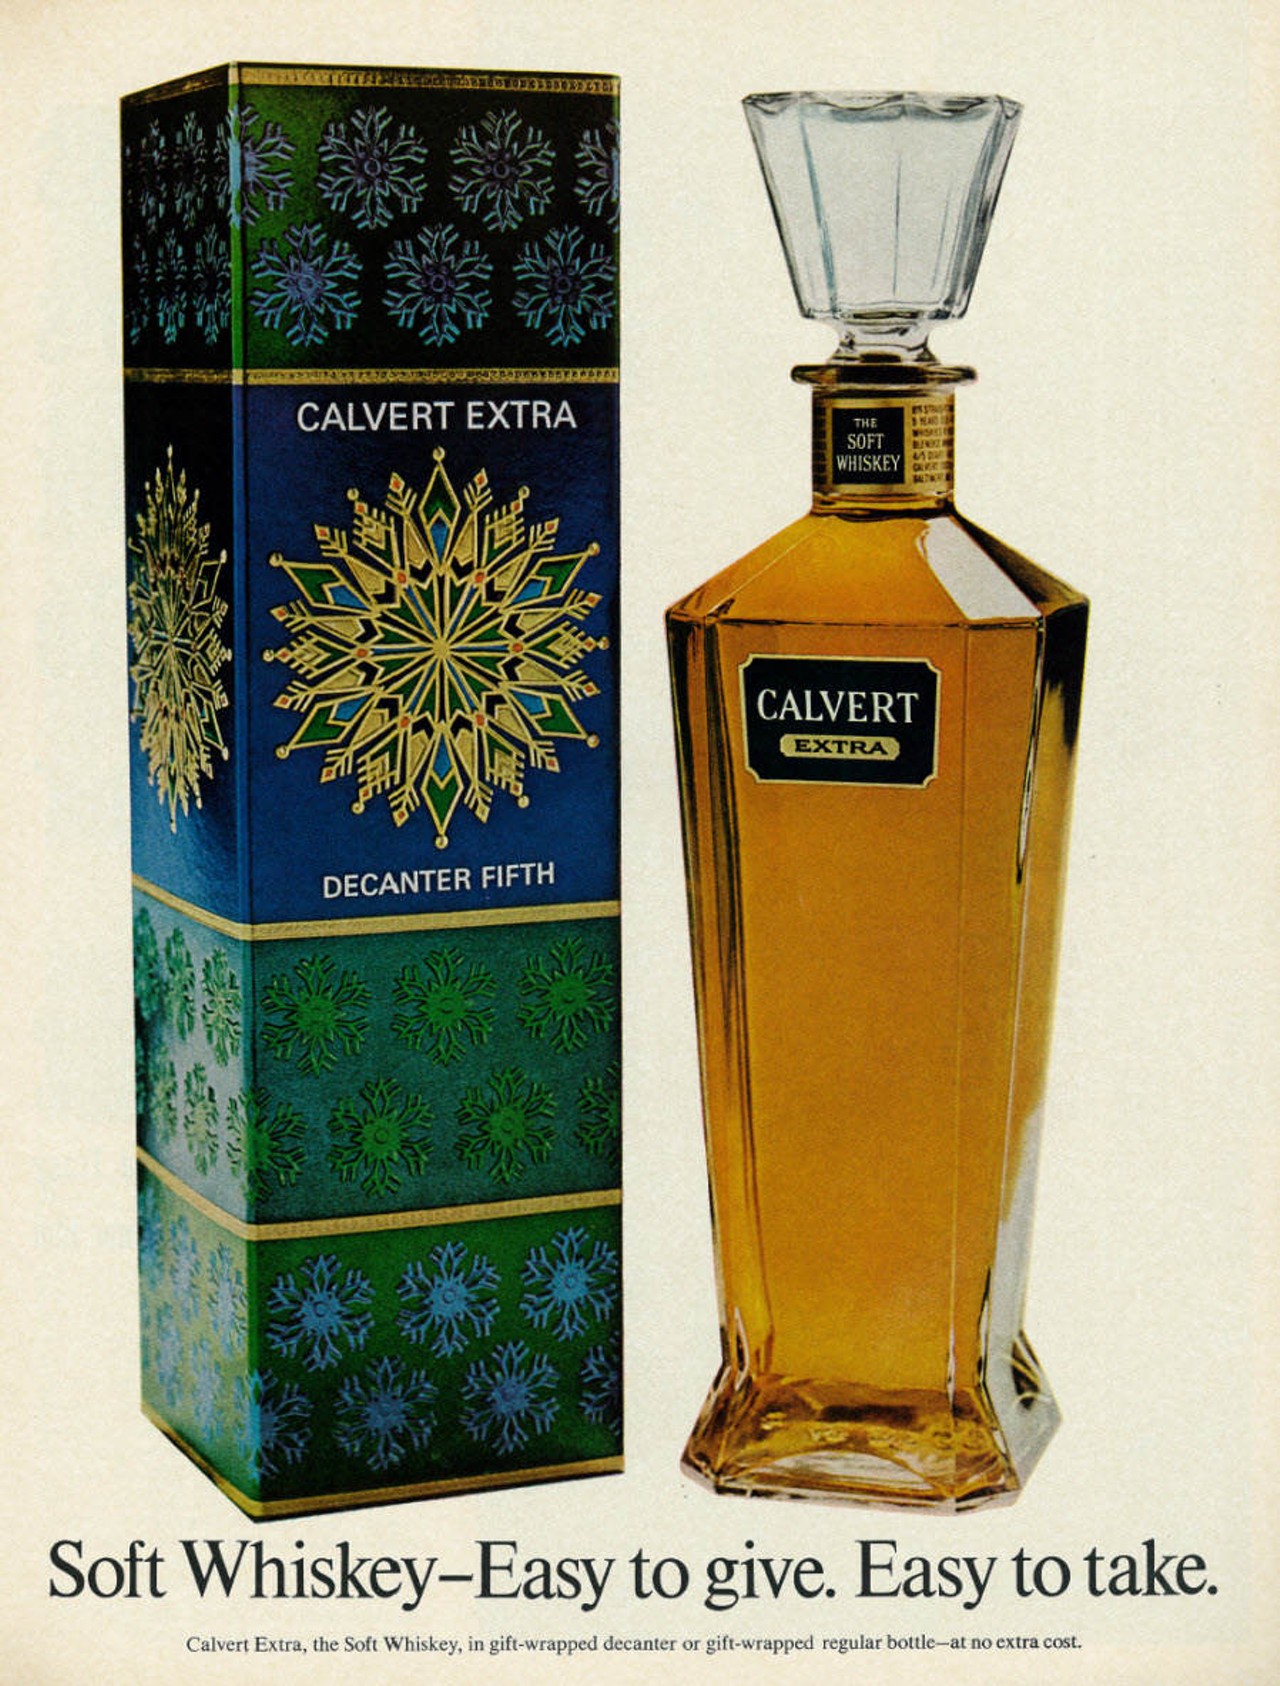 Calvert Extra Soft Whiskey & Gift Glass Decanter, 1968